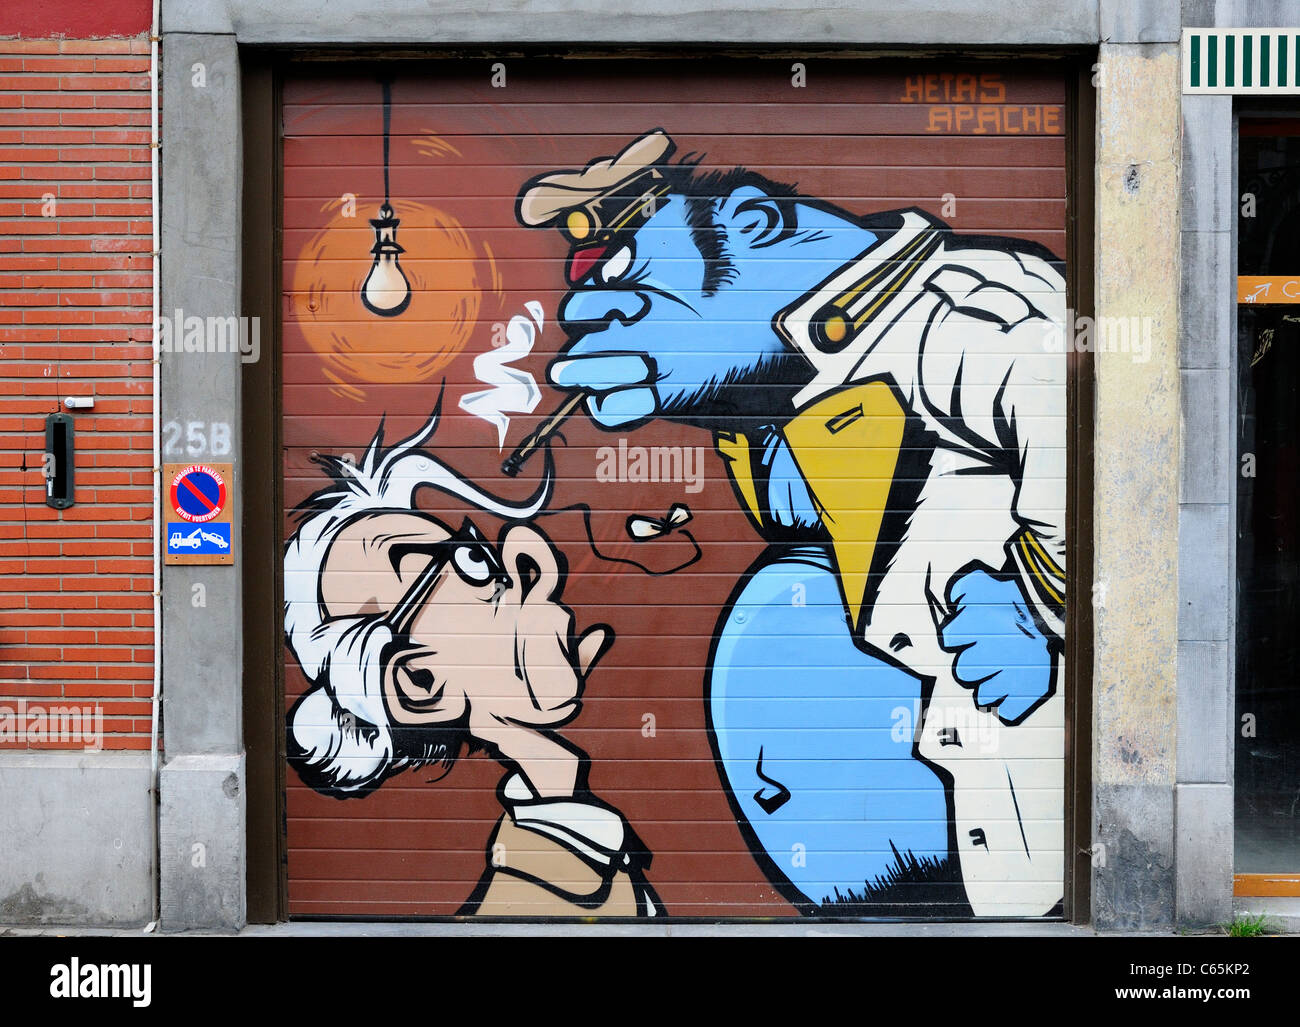 Brussels, Belgium. Graffiti painted on garage door Stock Photo